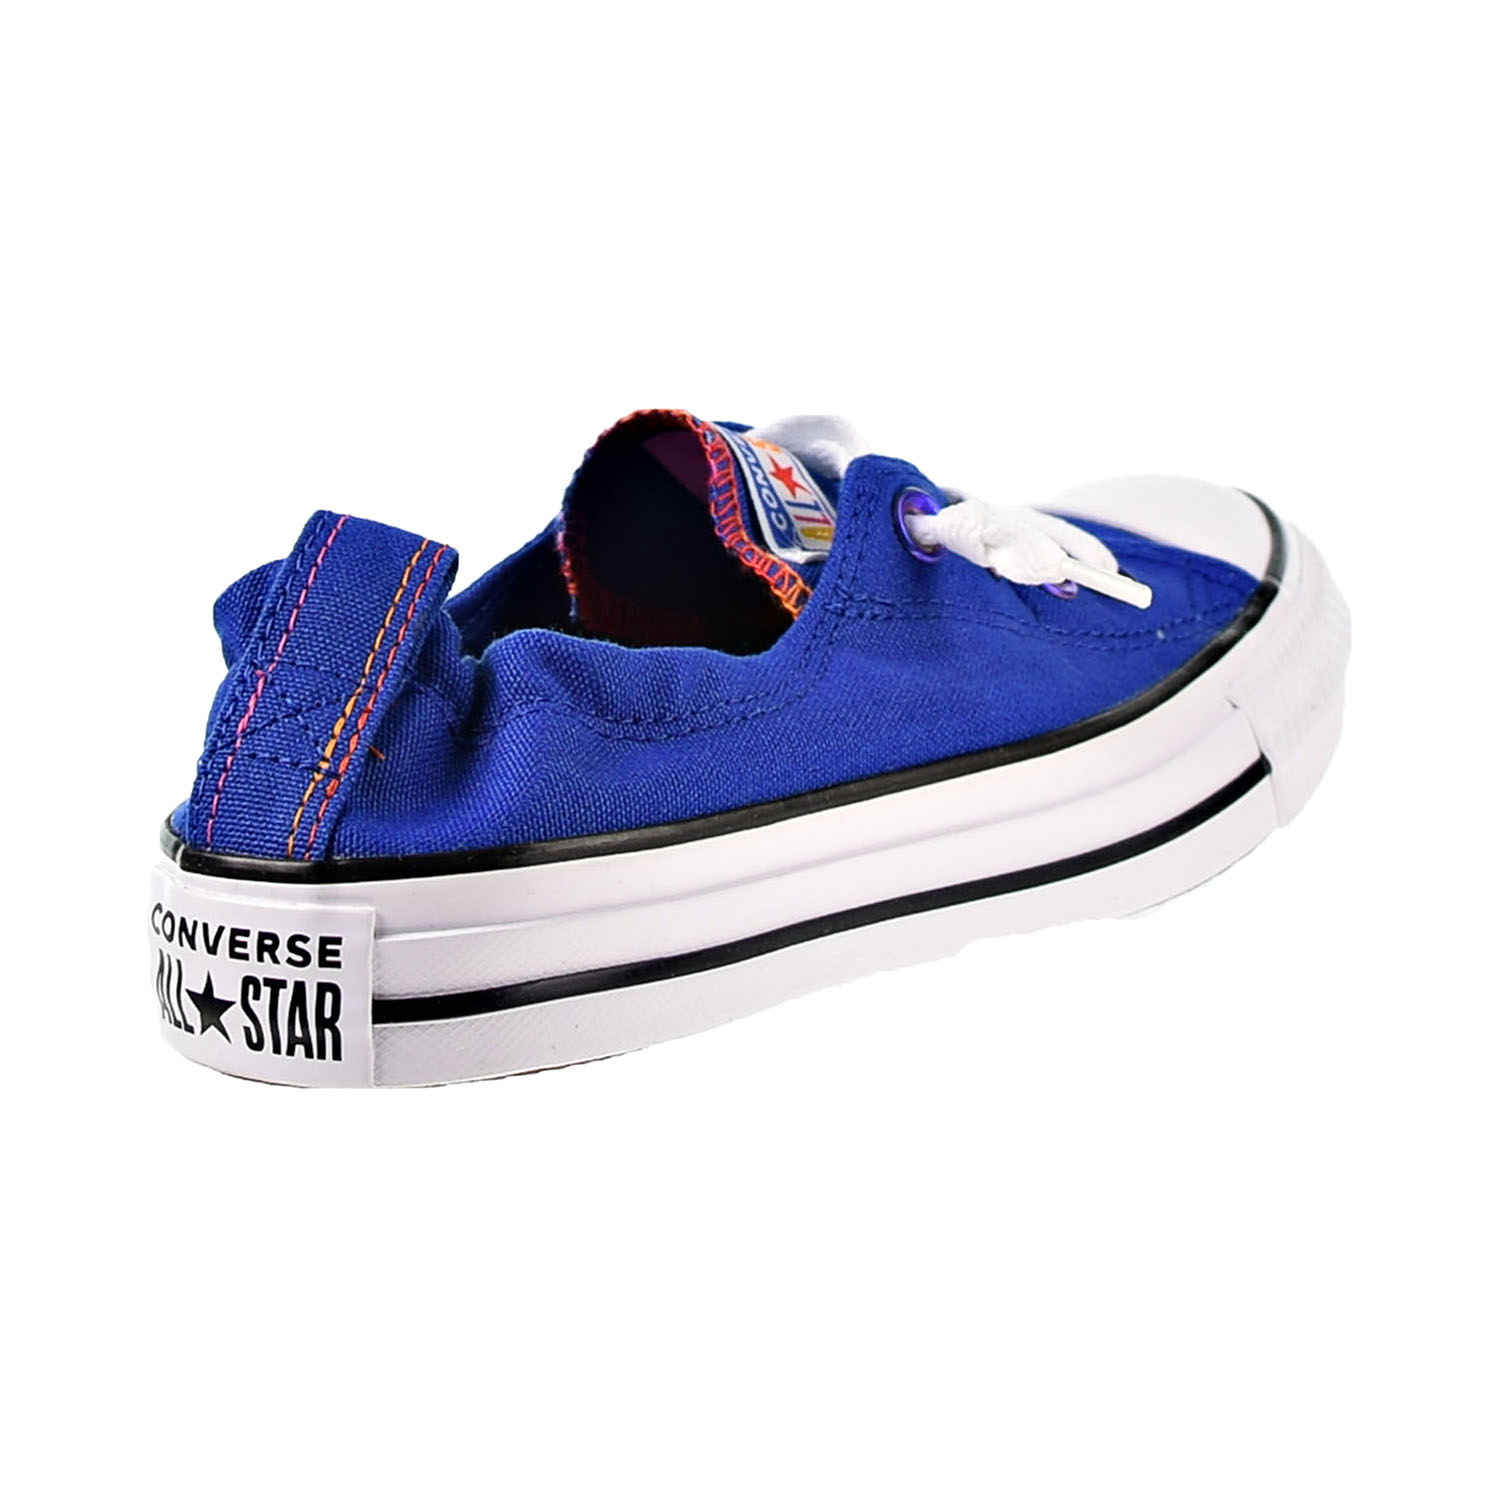 Converse Chuck Taylor All Star Shoreline Slip-On Women's Shoes Blue-White-Black  565443f